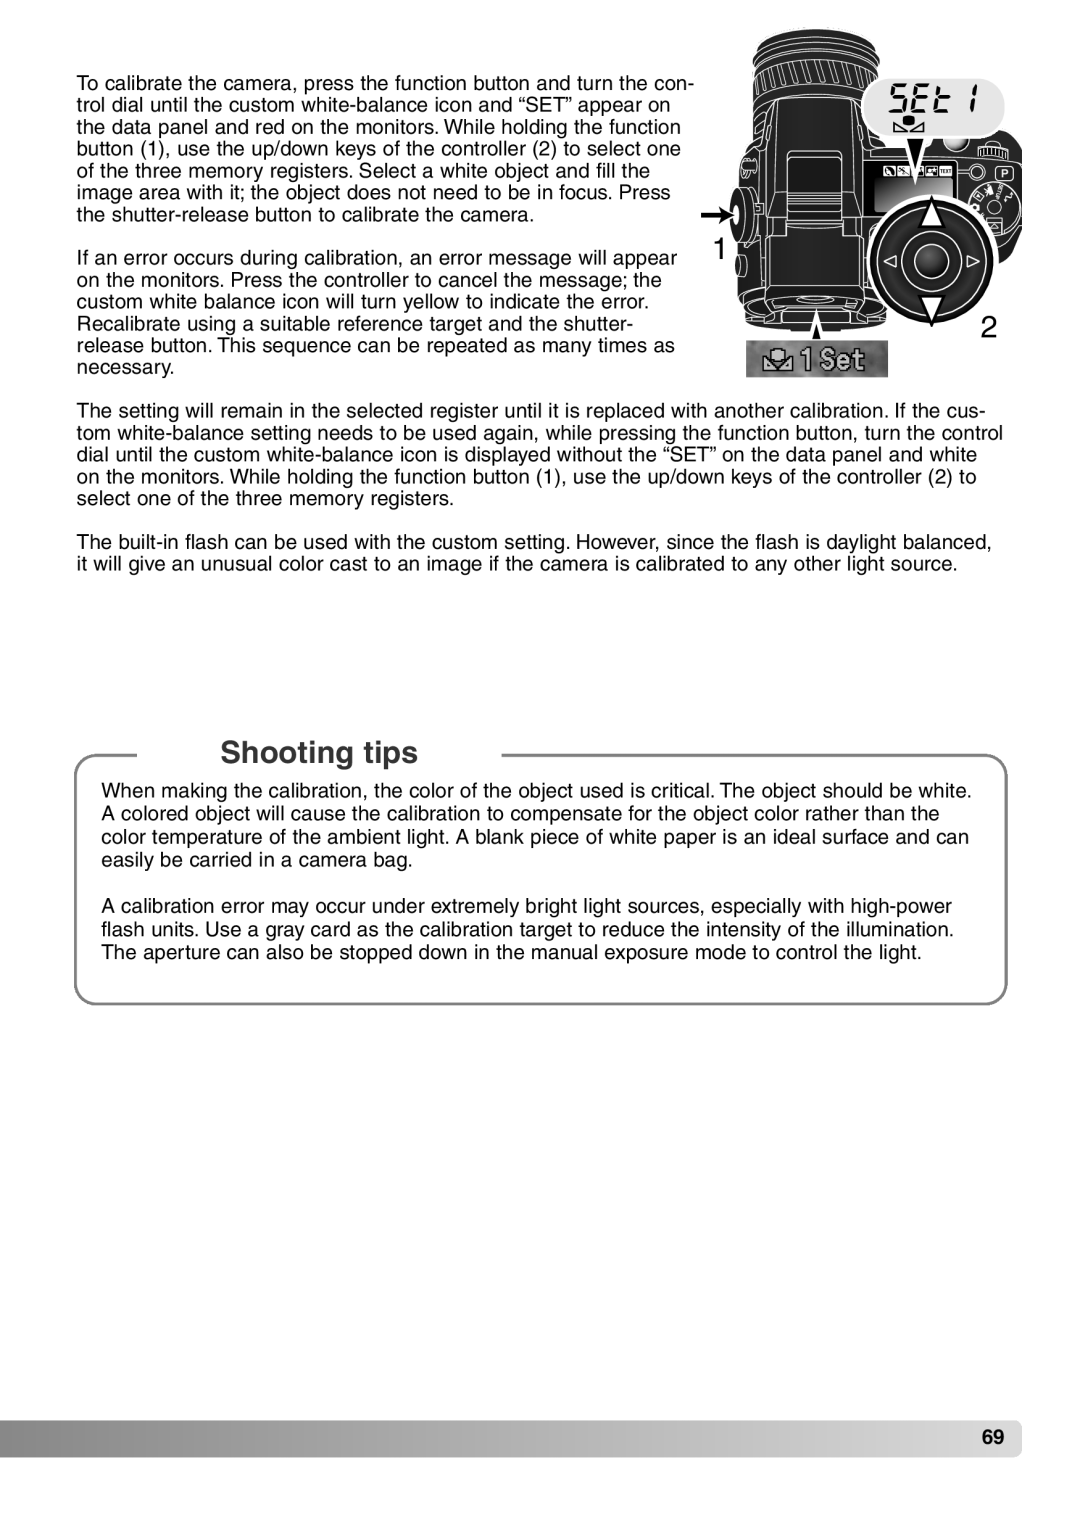 Konica Minolta 7Hi instruction manual Shooting tips 